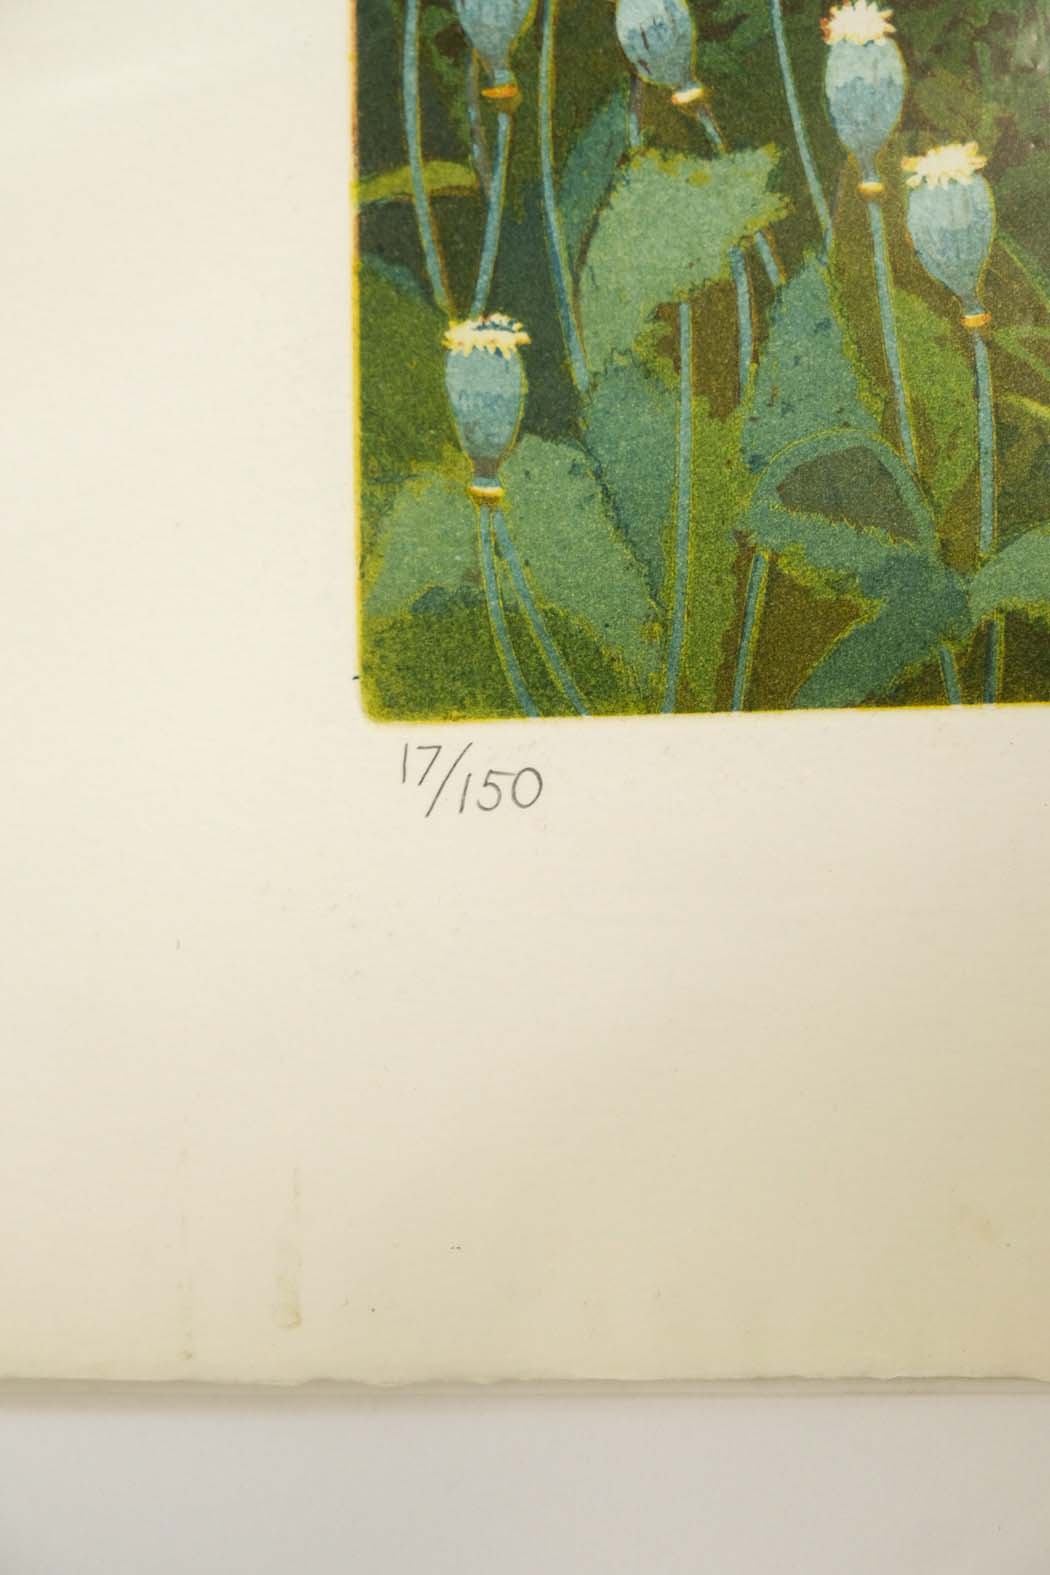 Frances St. Clair Miller "Lilies" Signed Print